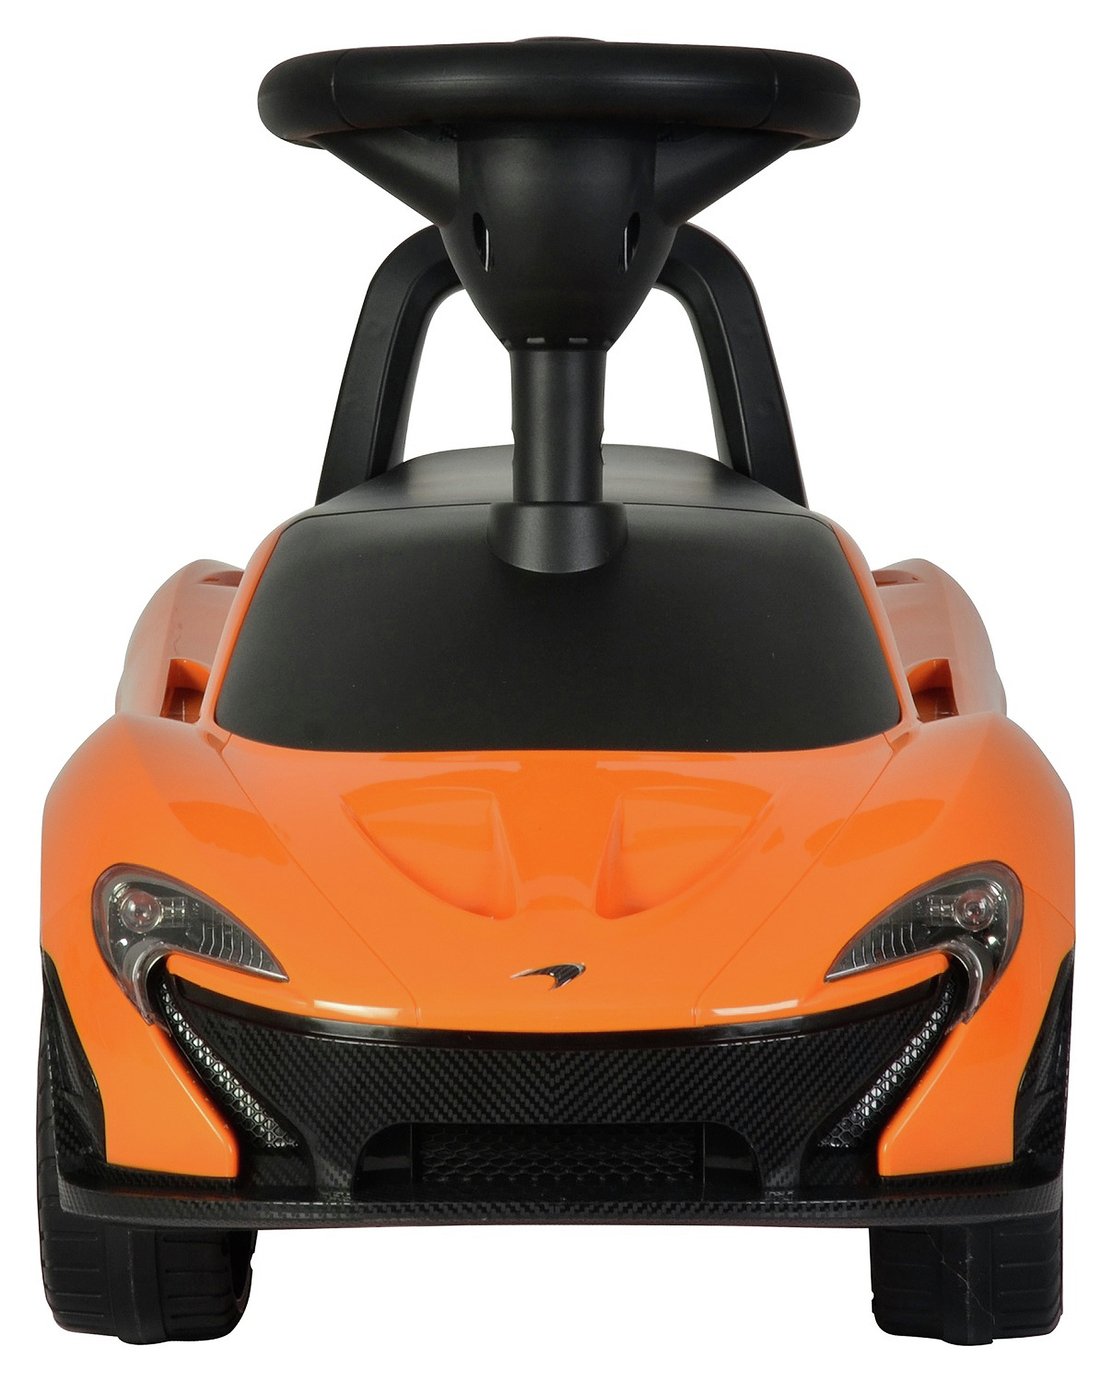 ToyStar McLaren MP1 Car Ride On Review